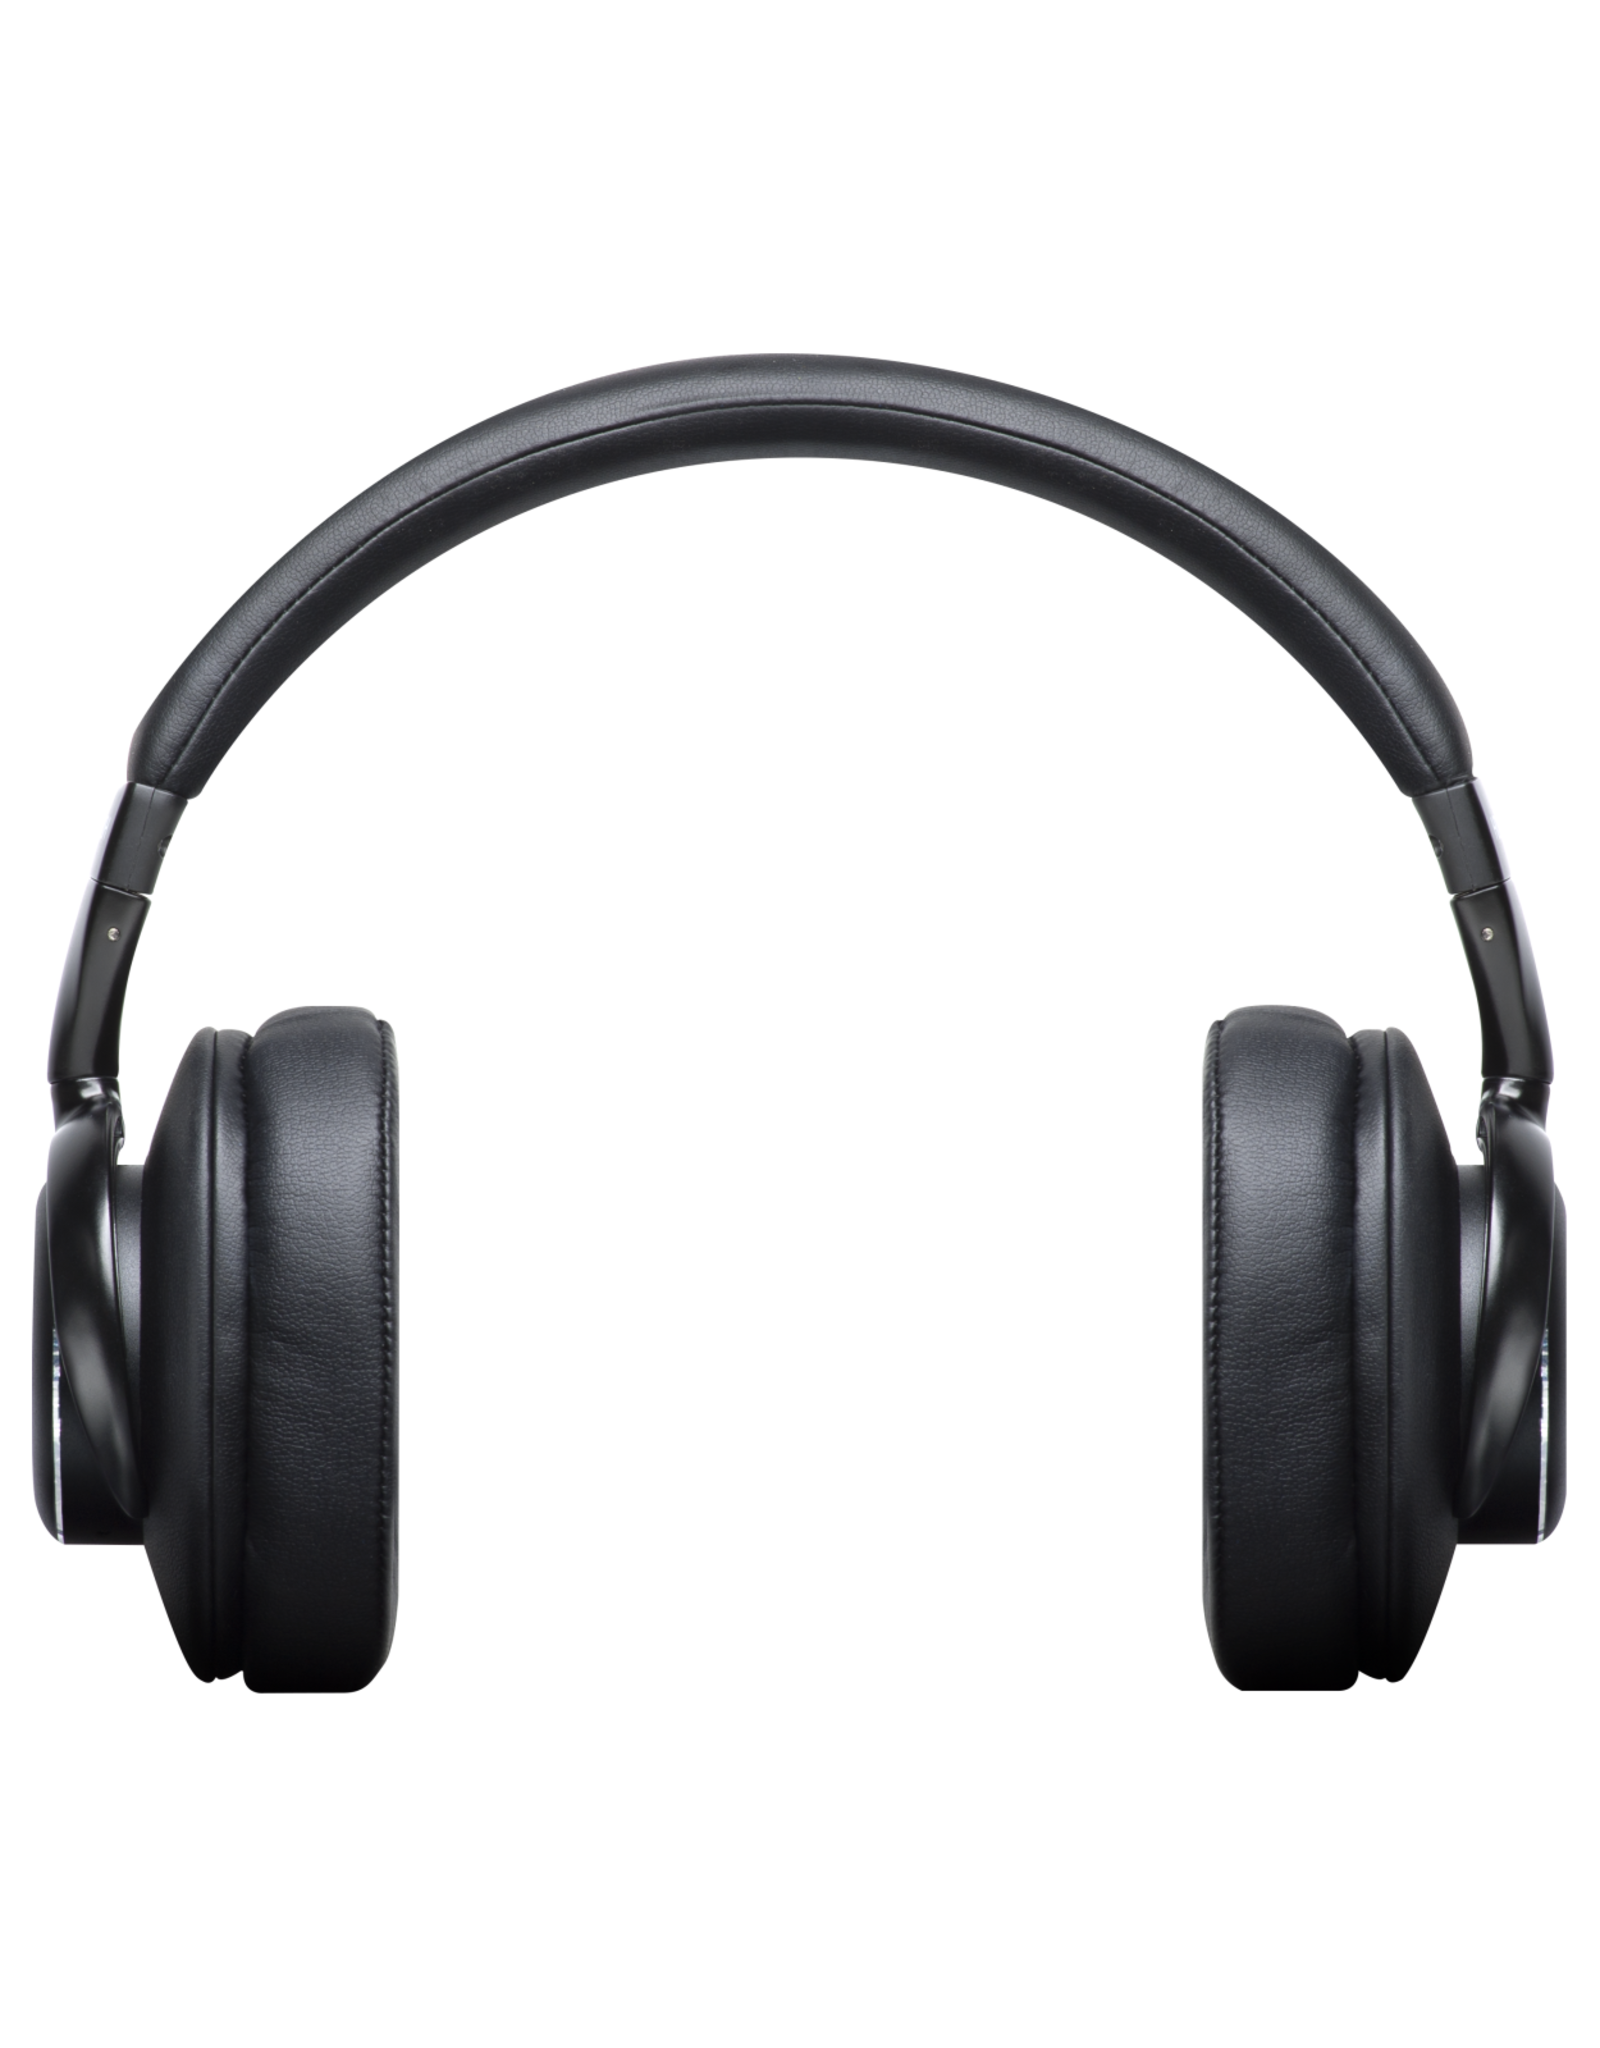 Presonus PreSonus HD10BT Professional Headphones with Active Noise Canceling and Bluetooth Wireless Technology